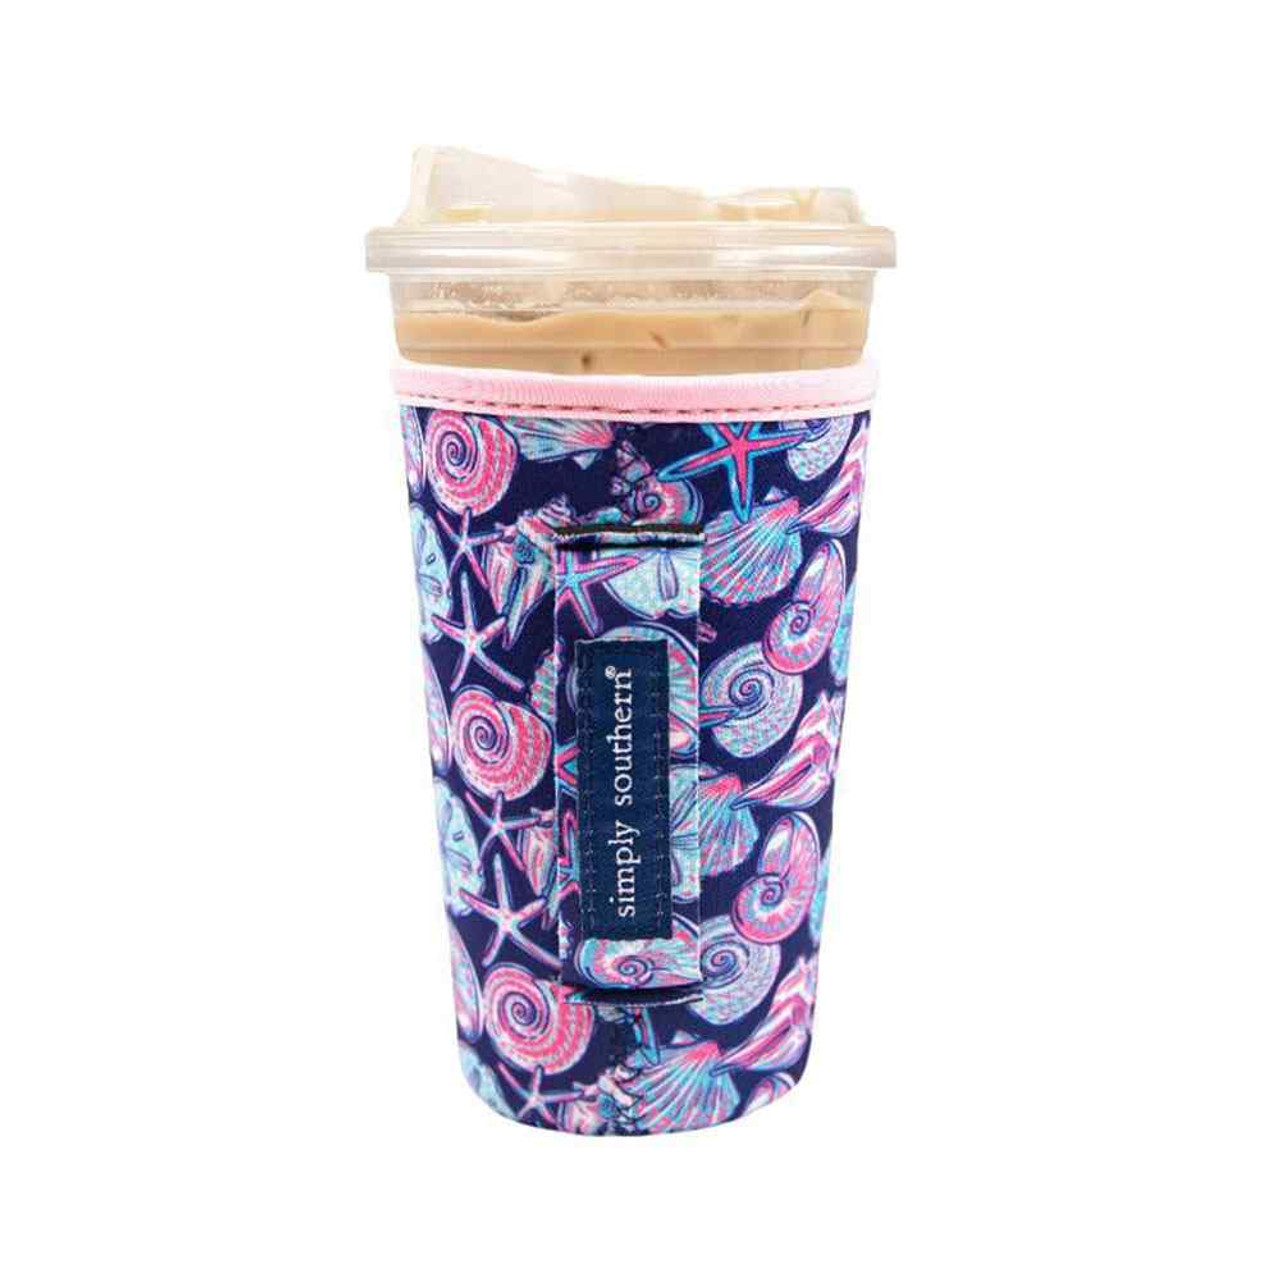 Bogg Bag Insulated tumbler Charm | Simply Southern insulated tumbler charm  | iced coffee sleeve | coffee sleeve | drink sleeve